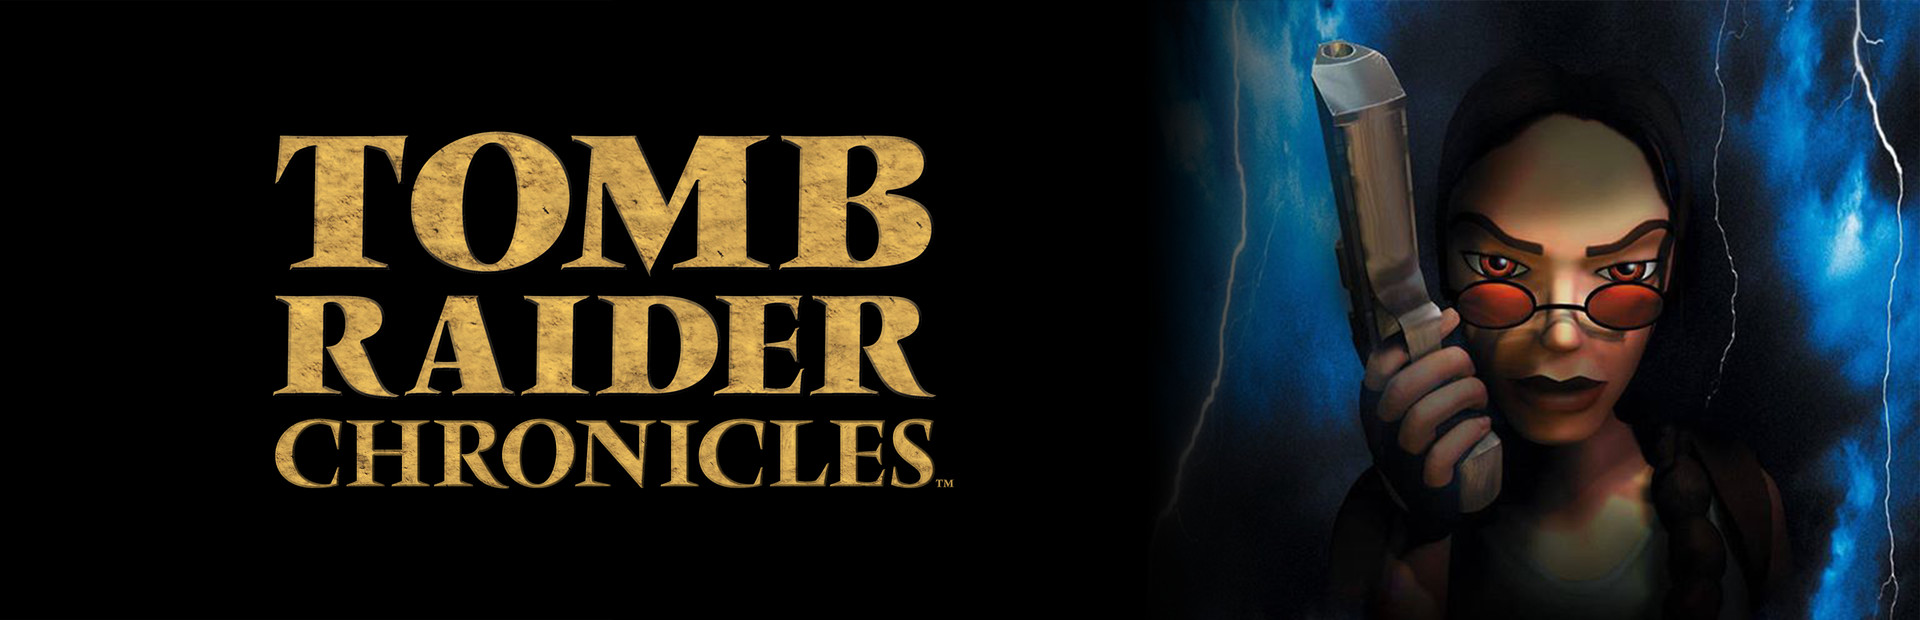 Tomb Raider V: Chronicles cover image